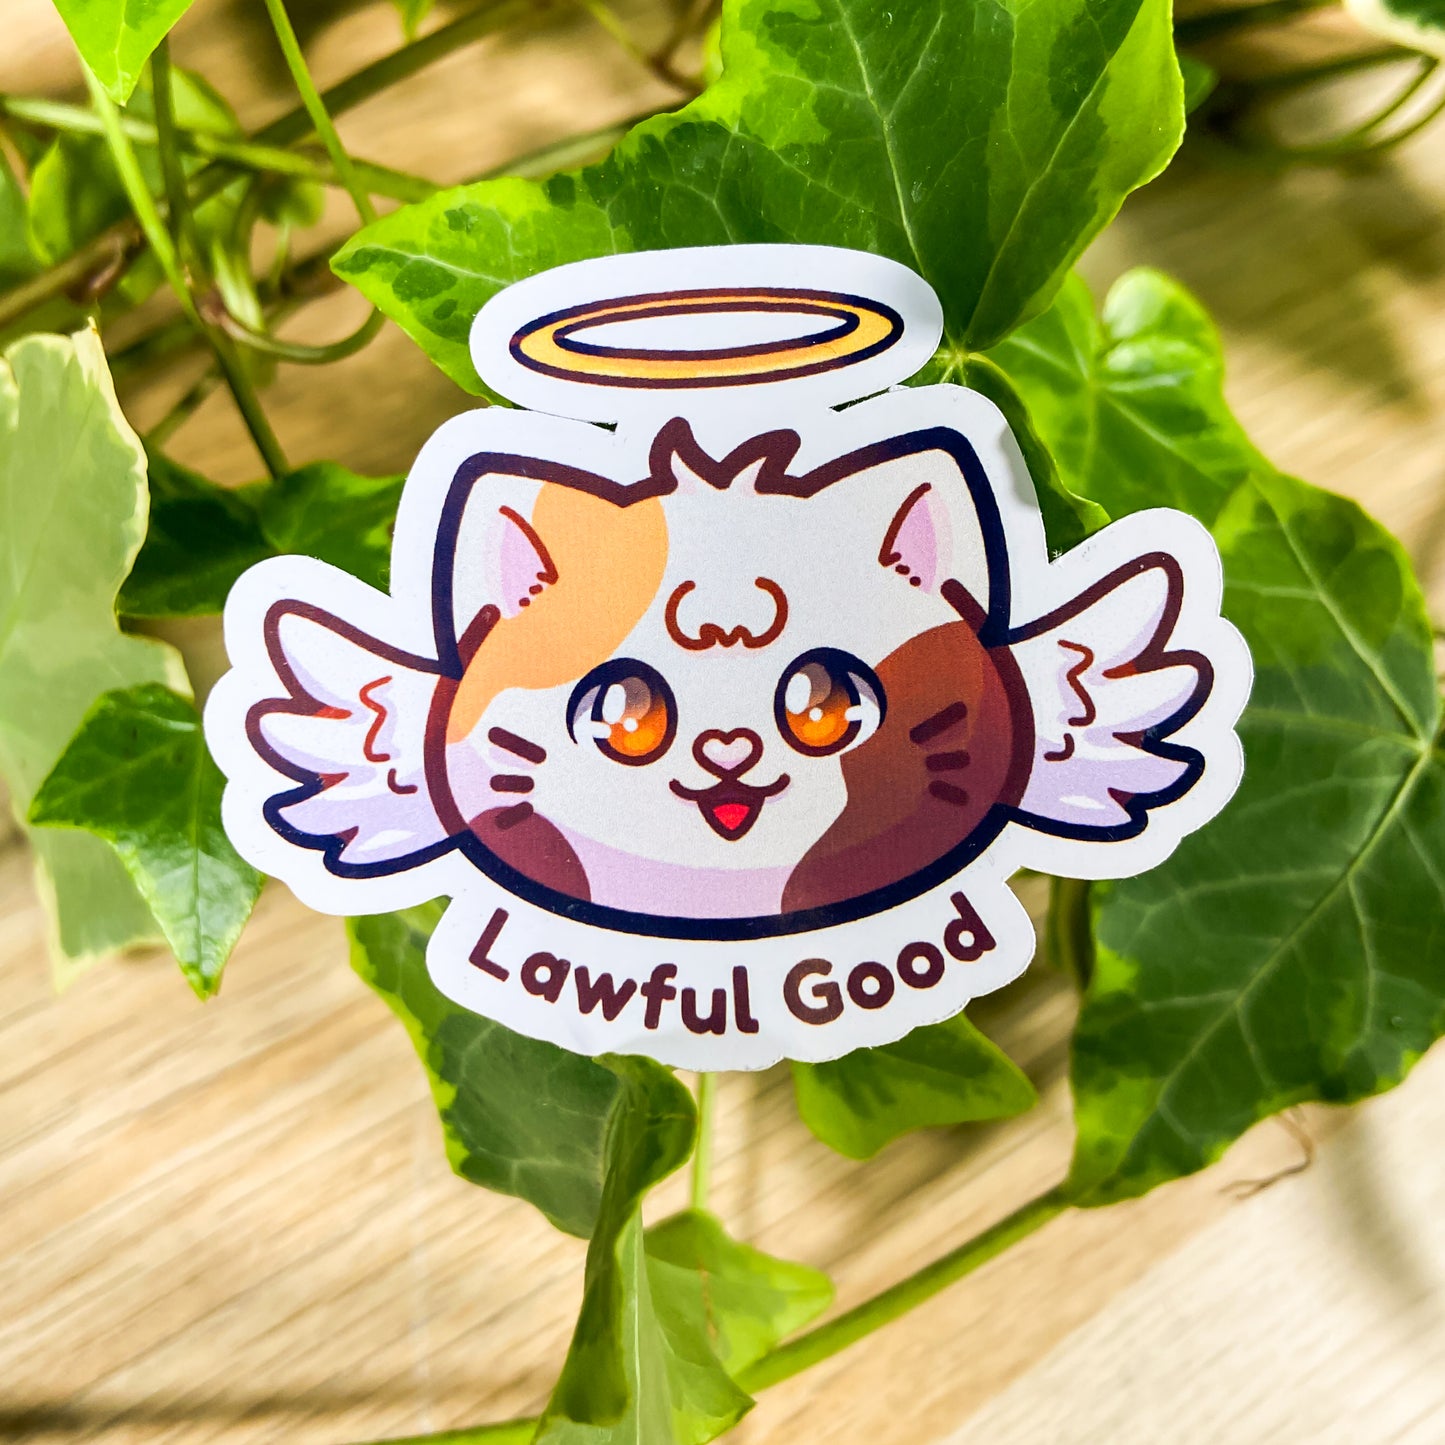 Lawful good cat sticker